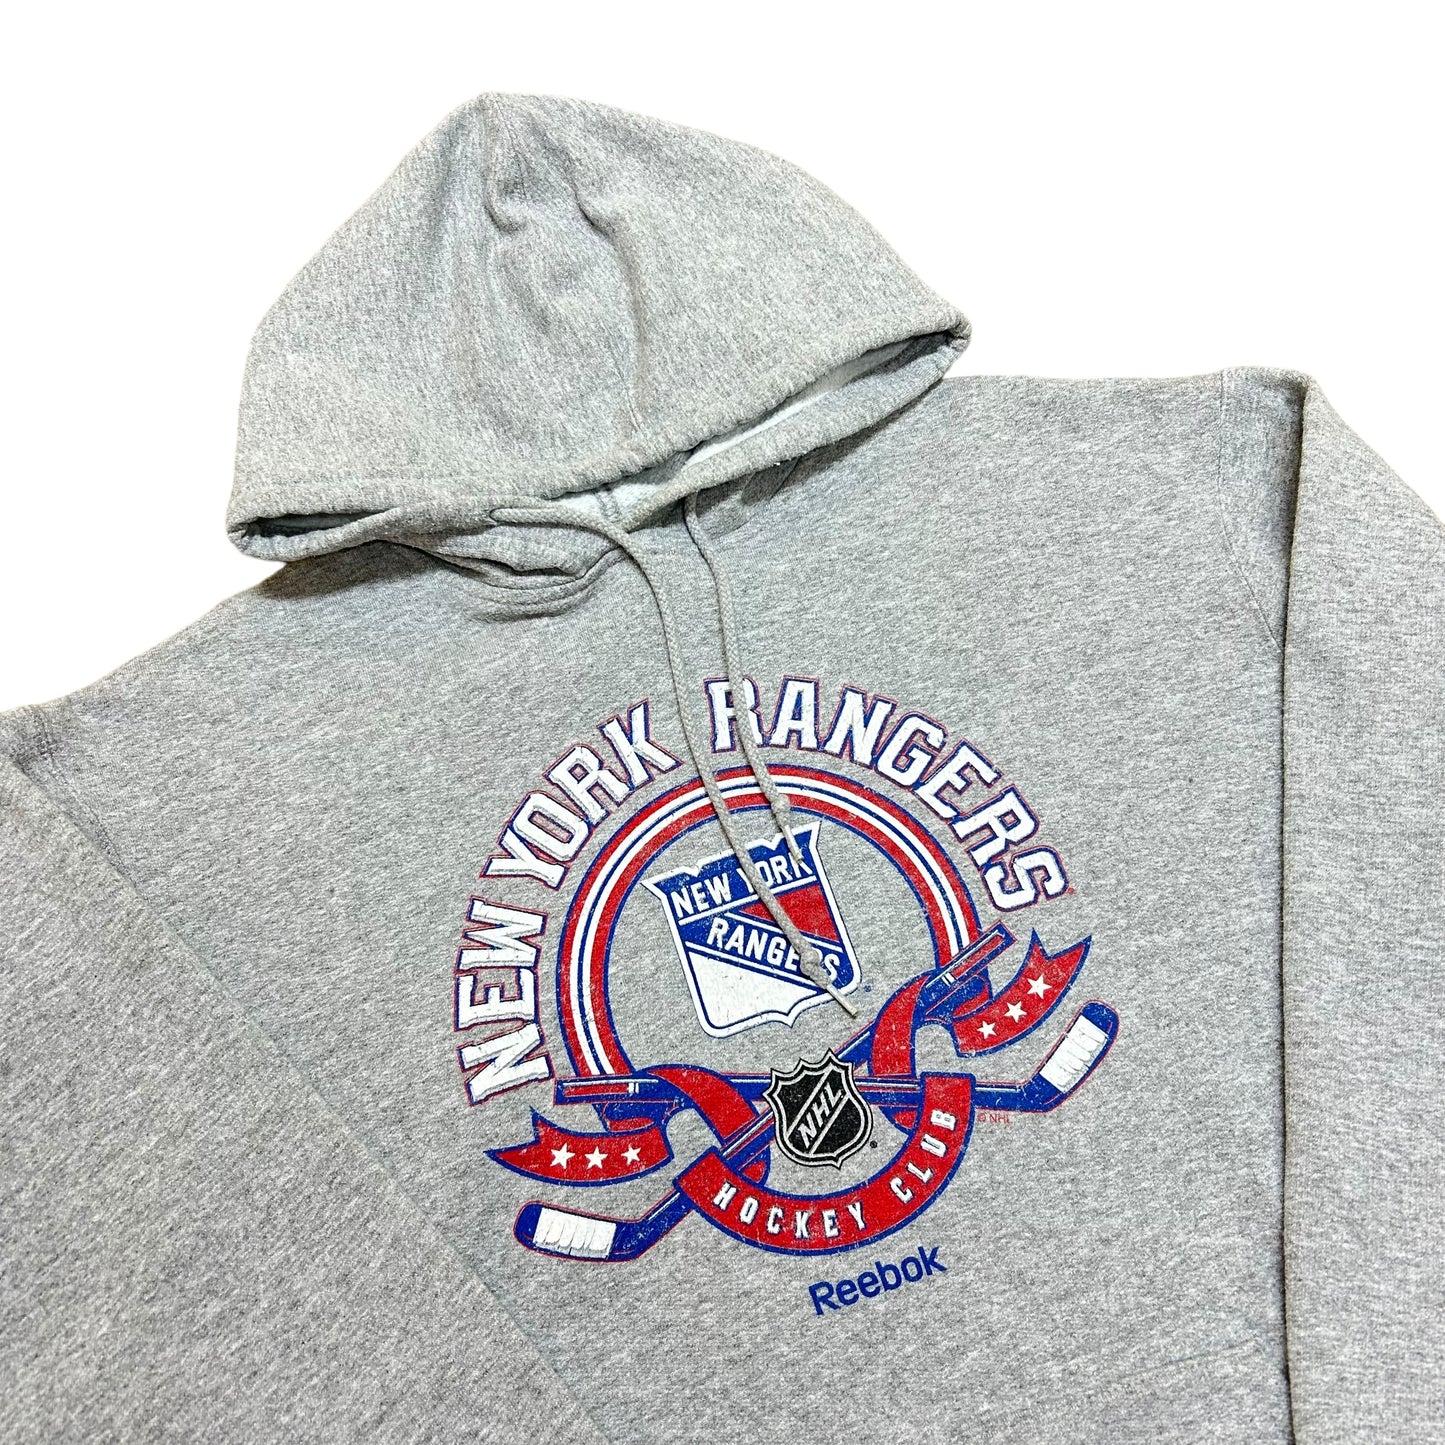 Late 2000s Reebok New York Rangers Hockey Club Grey Hooded Sweatshirt - Size Large